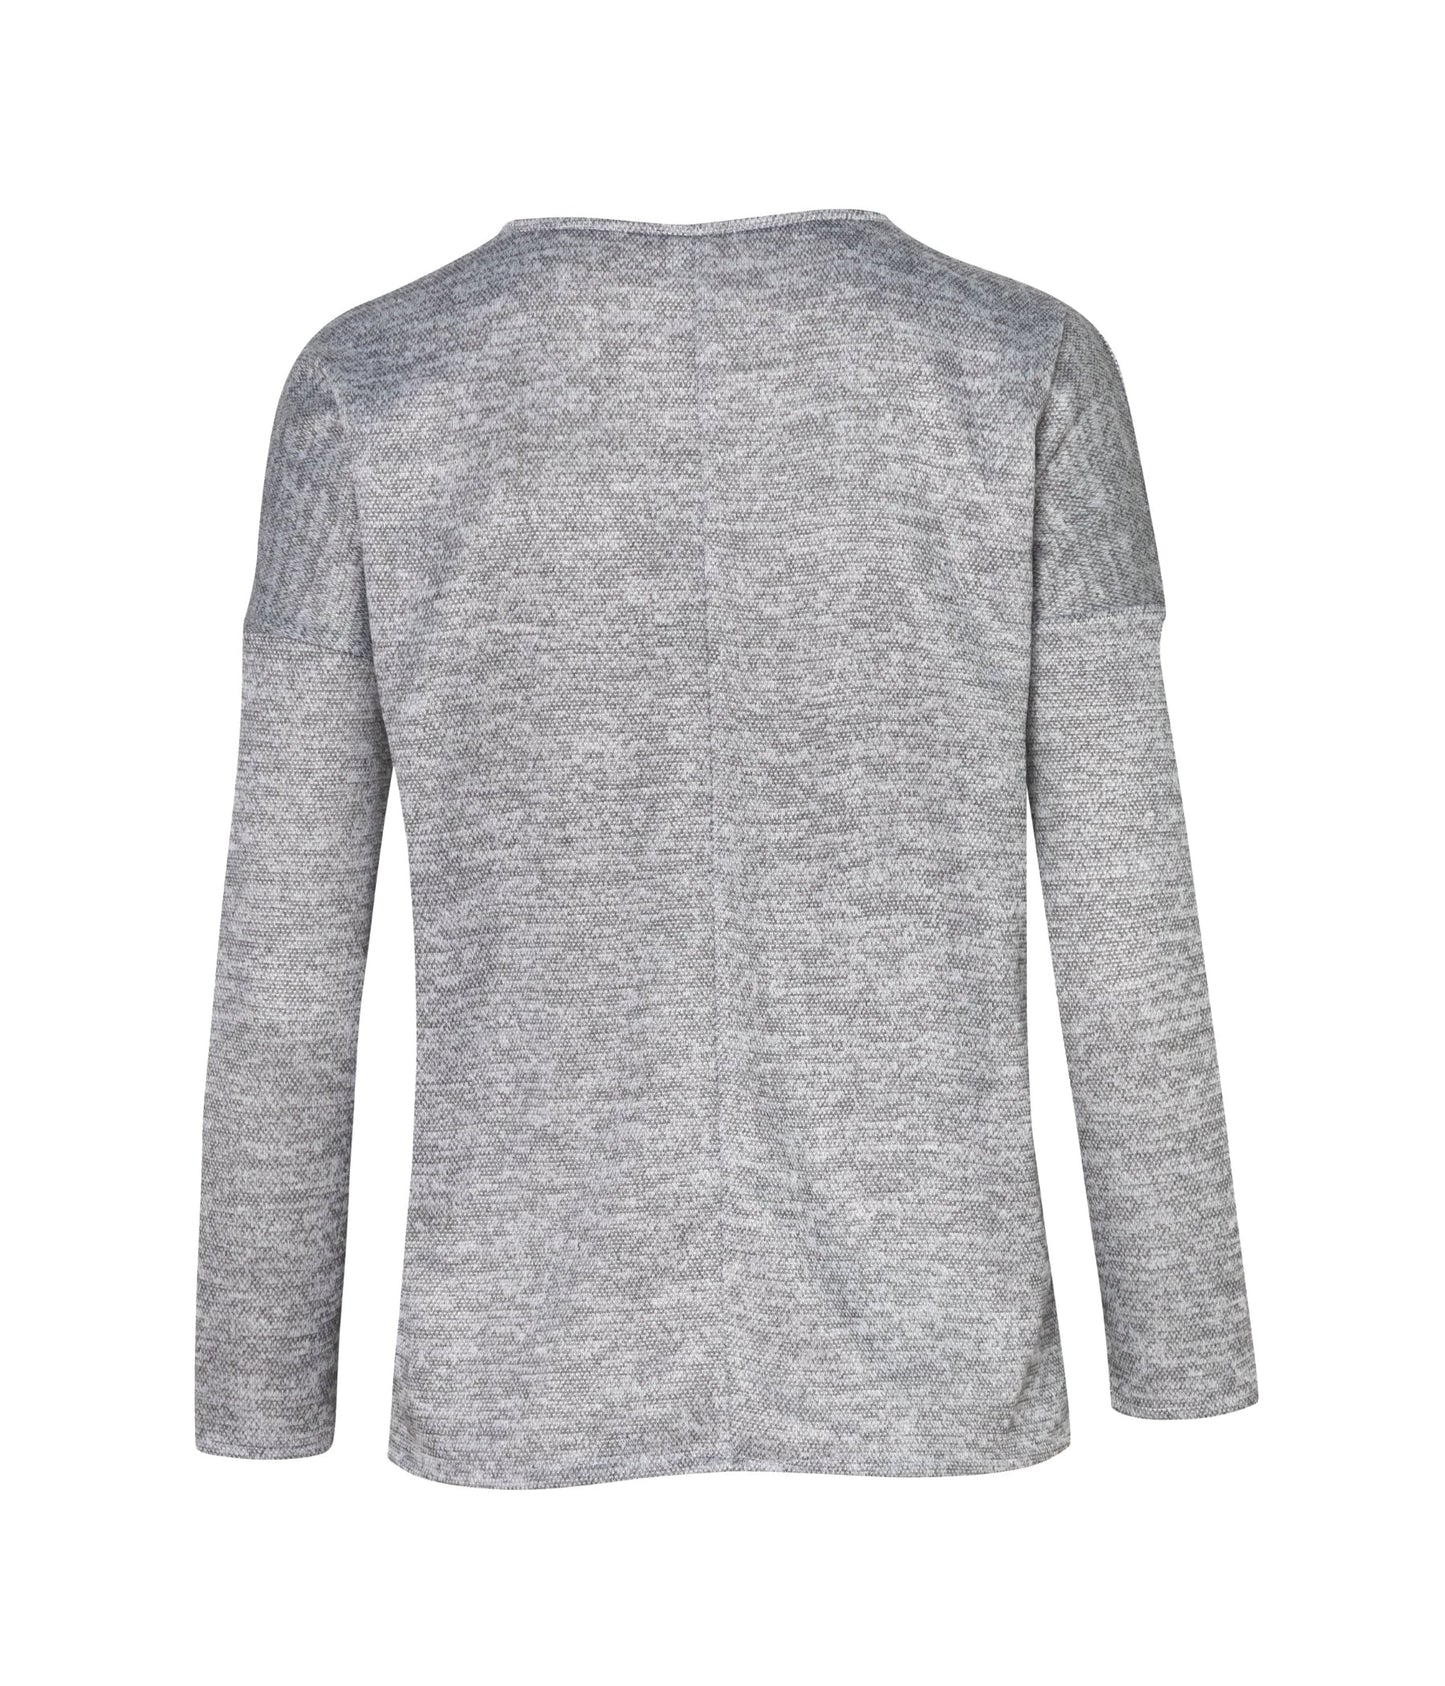 Verdelimon - Sweater - Mucura - Grey -  Back